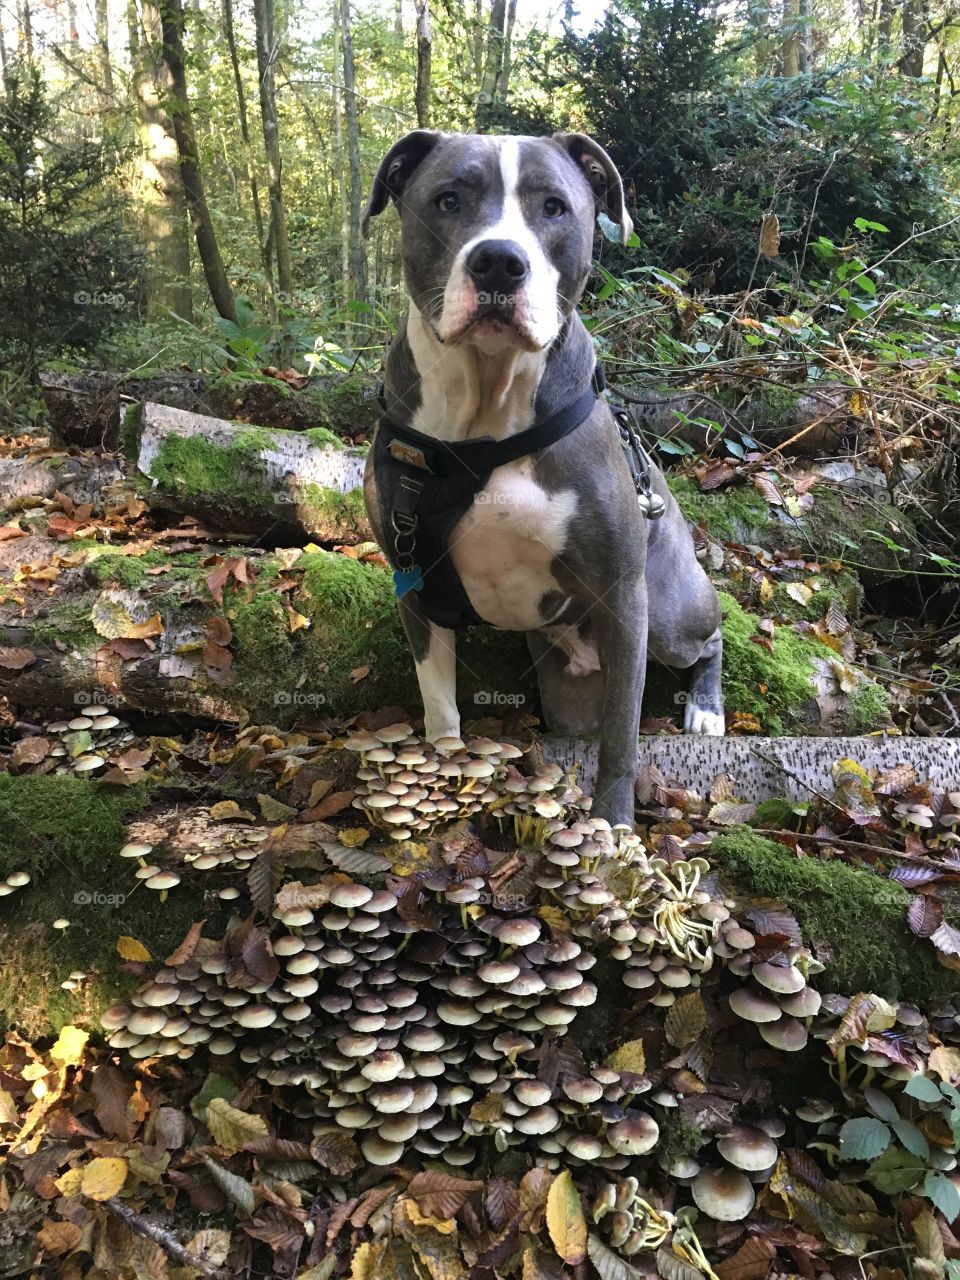 Dog with mushrooms